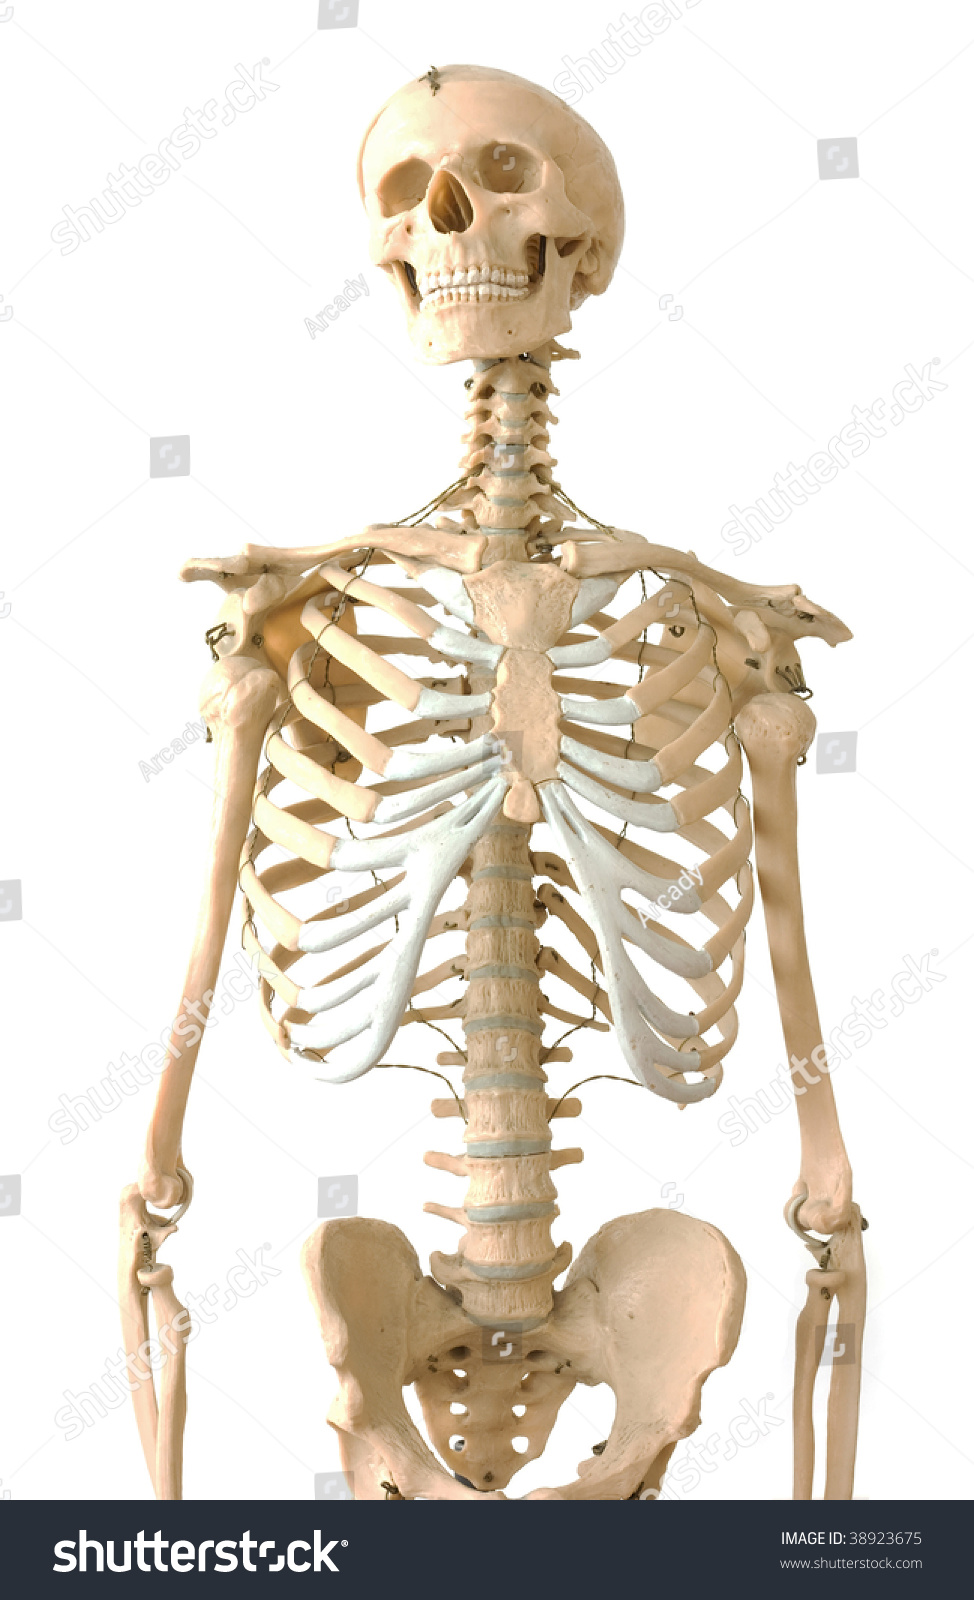 Human Medical Skeleton Stock Photo 38923675 : Shutterstock